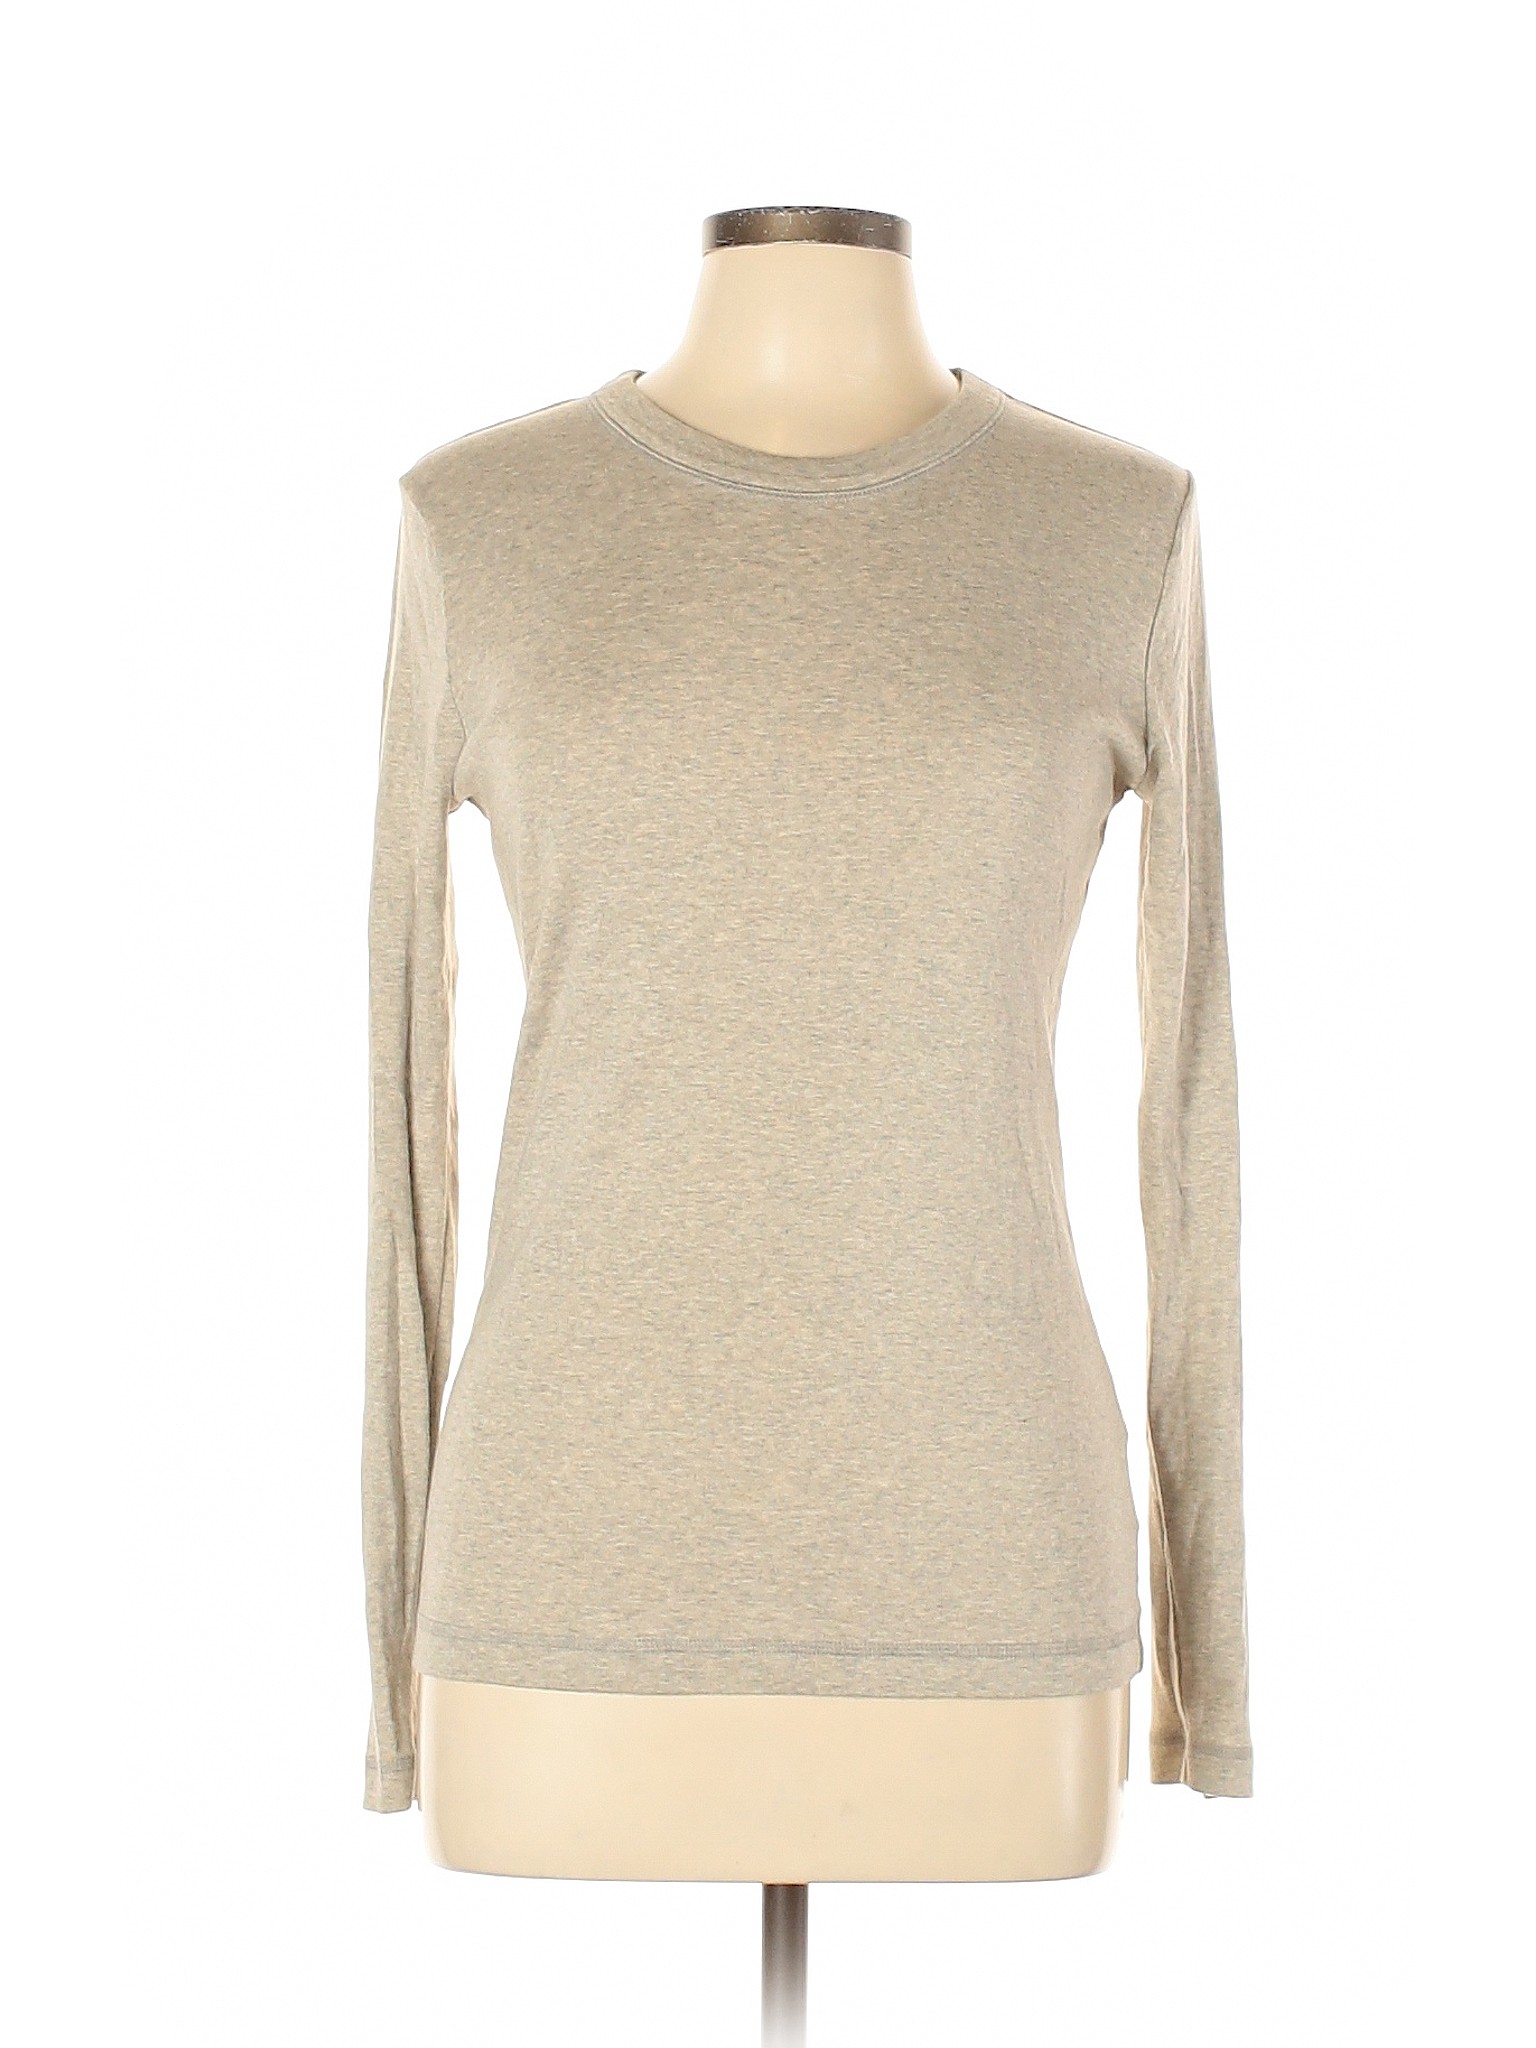 Gap Women Brown Long Sleeve T-Shirt L | eBay